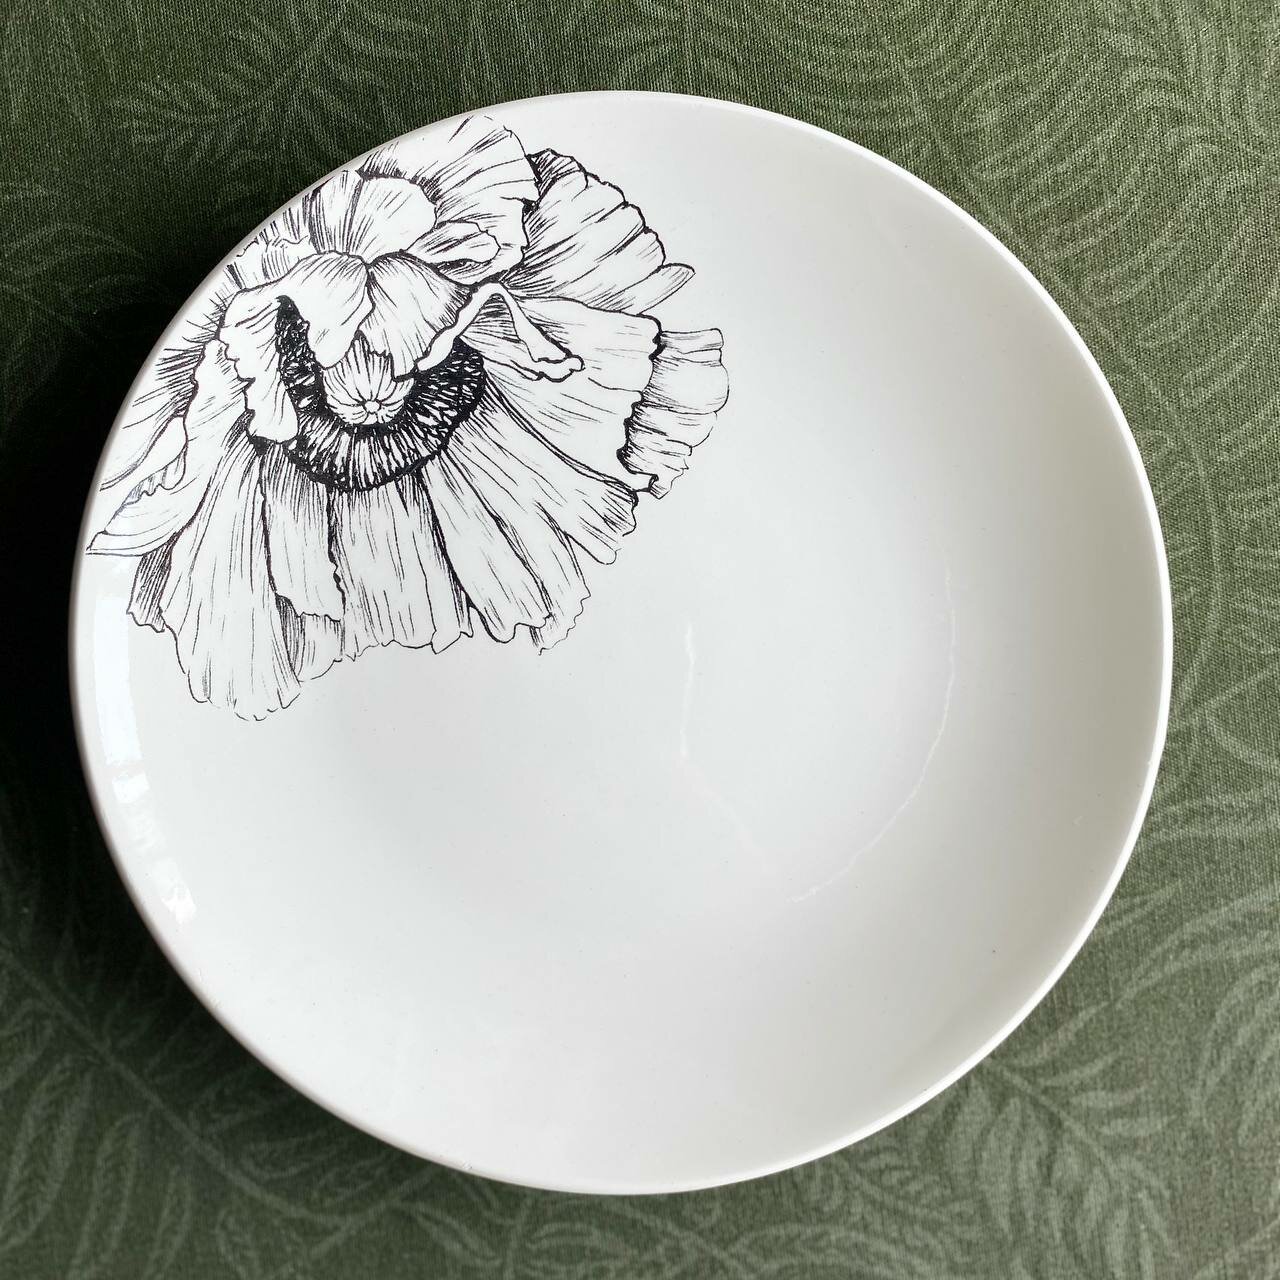 Тарелка обеденная плоская, 1 шт, диаметр 21 см, керамика, коллекция "Монохром Мак"